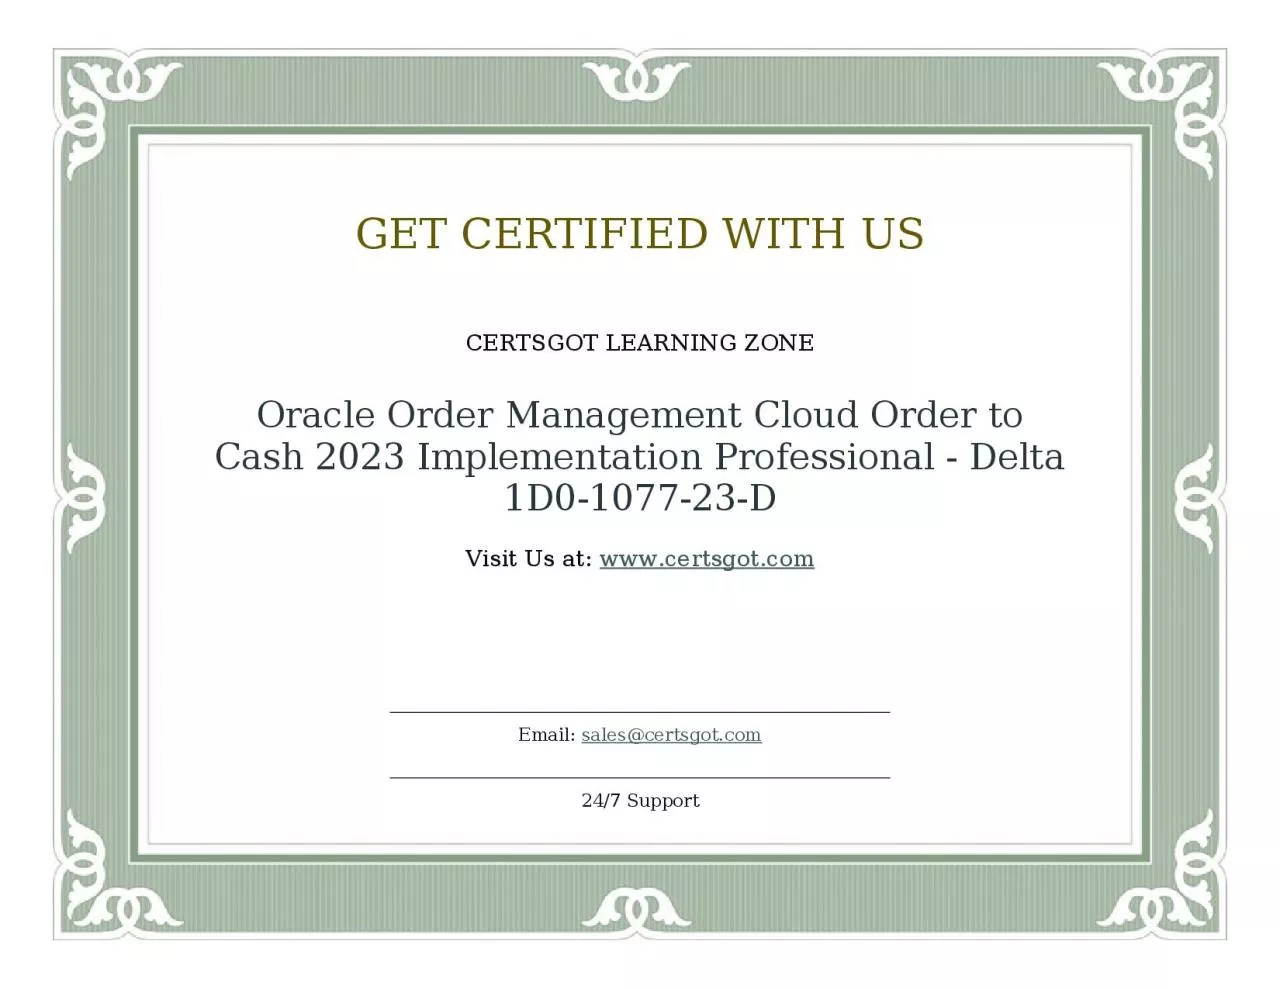 Oracle Order Management Cloud Order to Cash 2023 Implementation Professional - Delta 1D0-1077-23-D